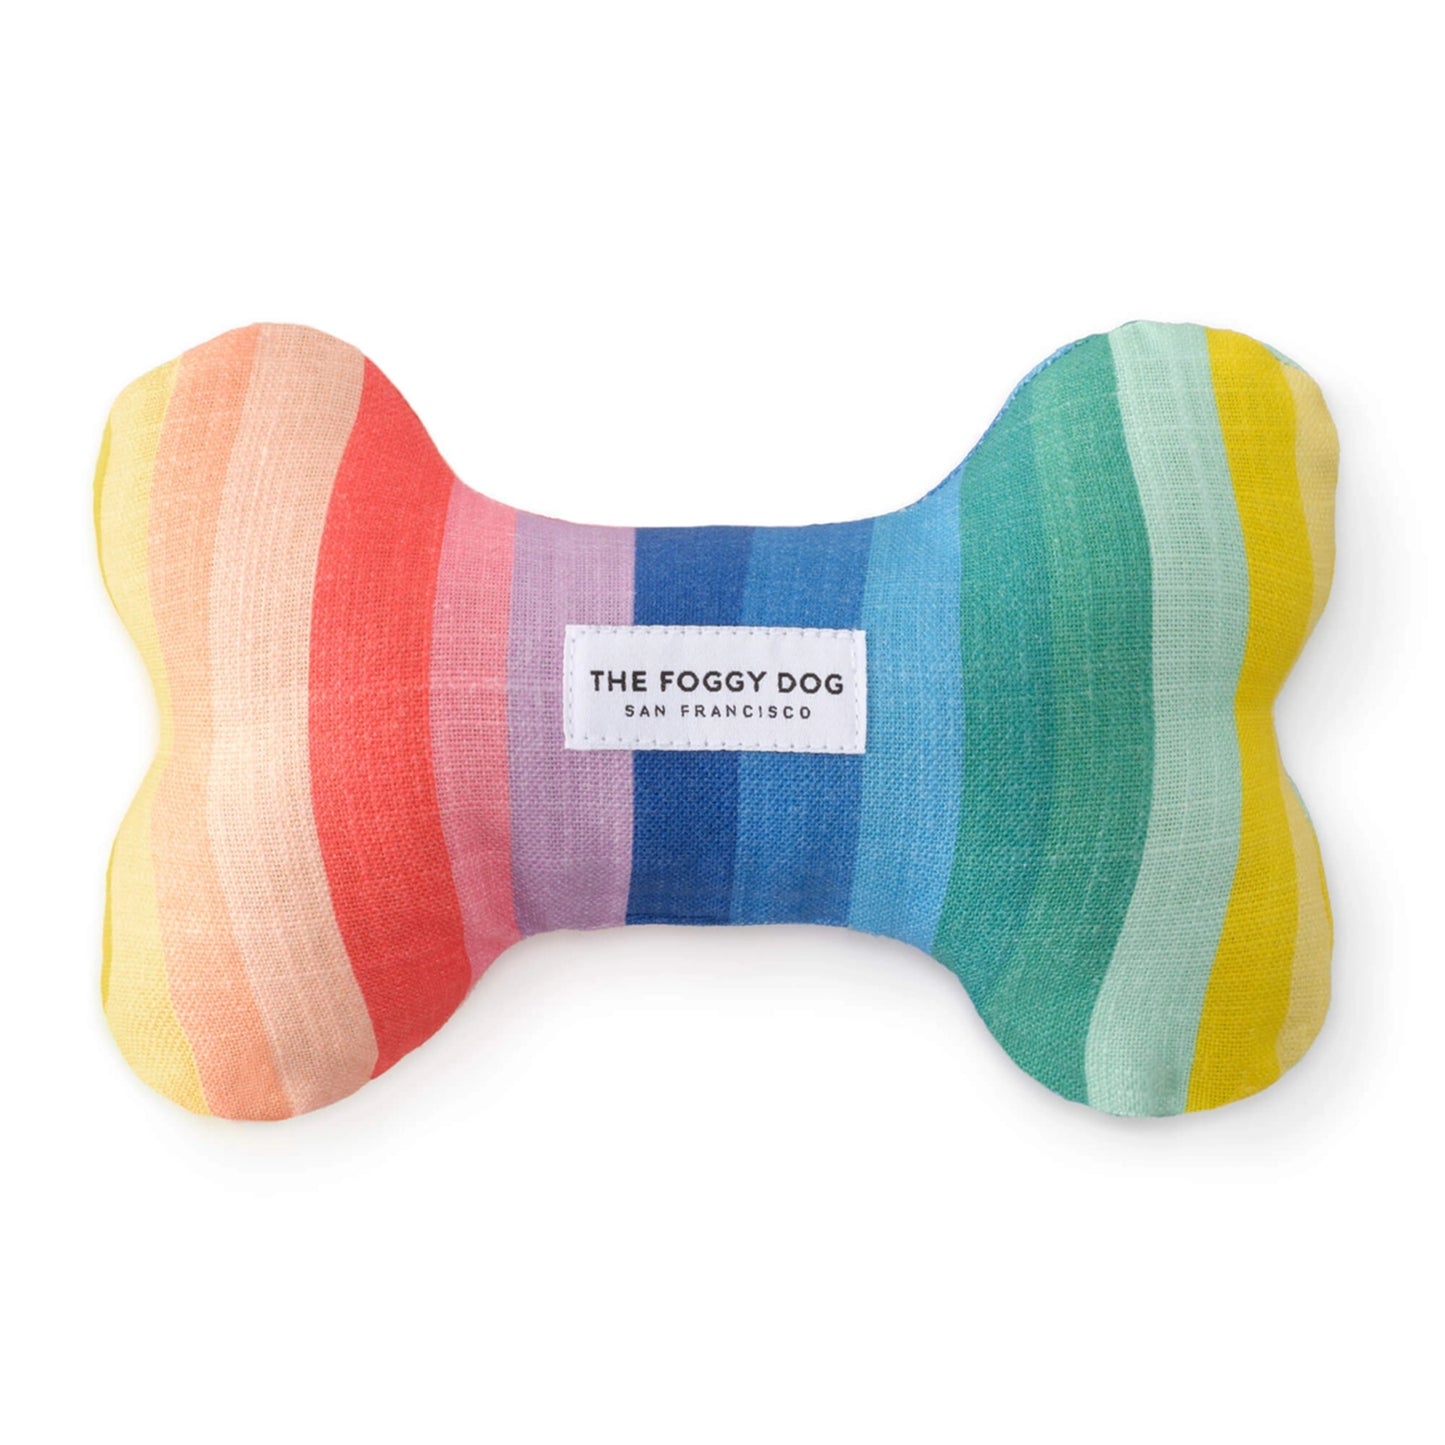 Dog Bone Squeaky Toy - Over the Rainbow